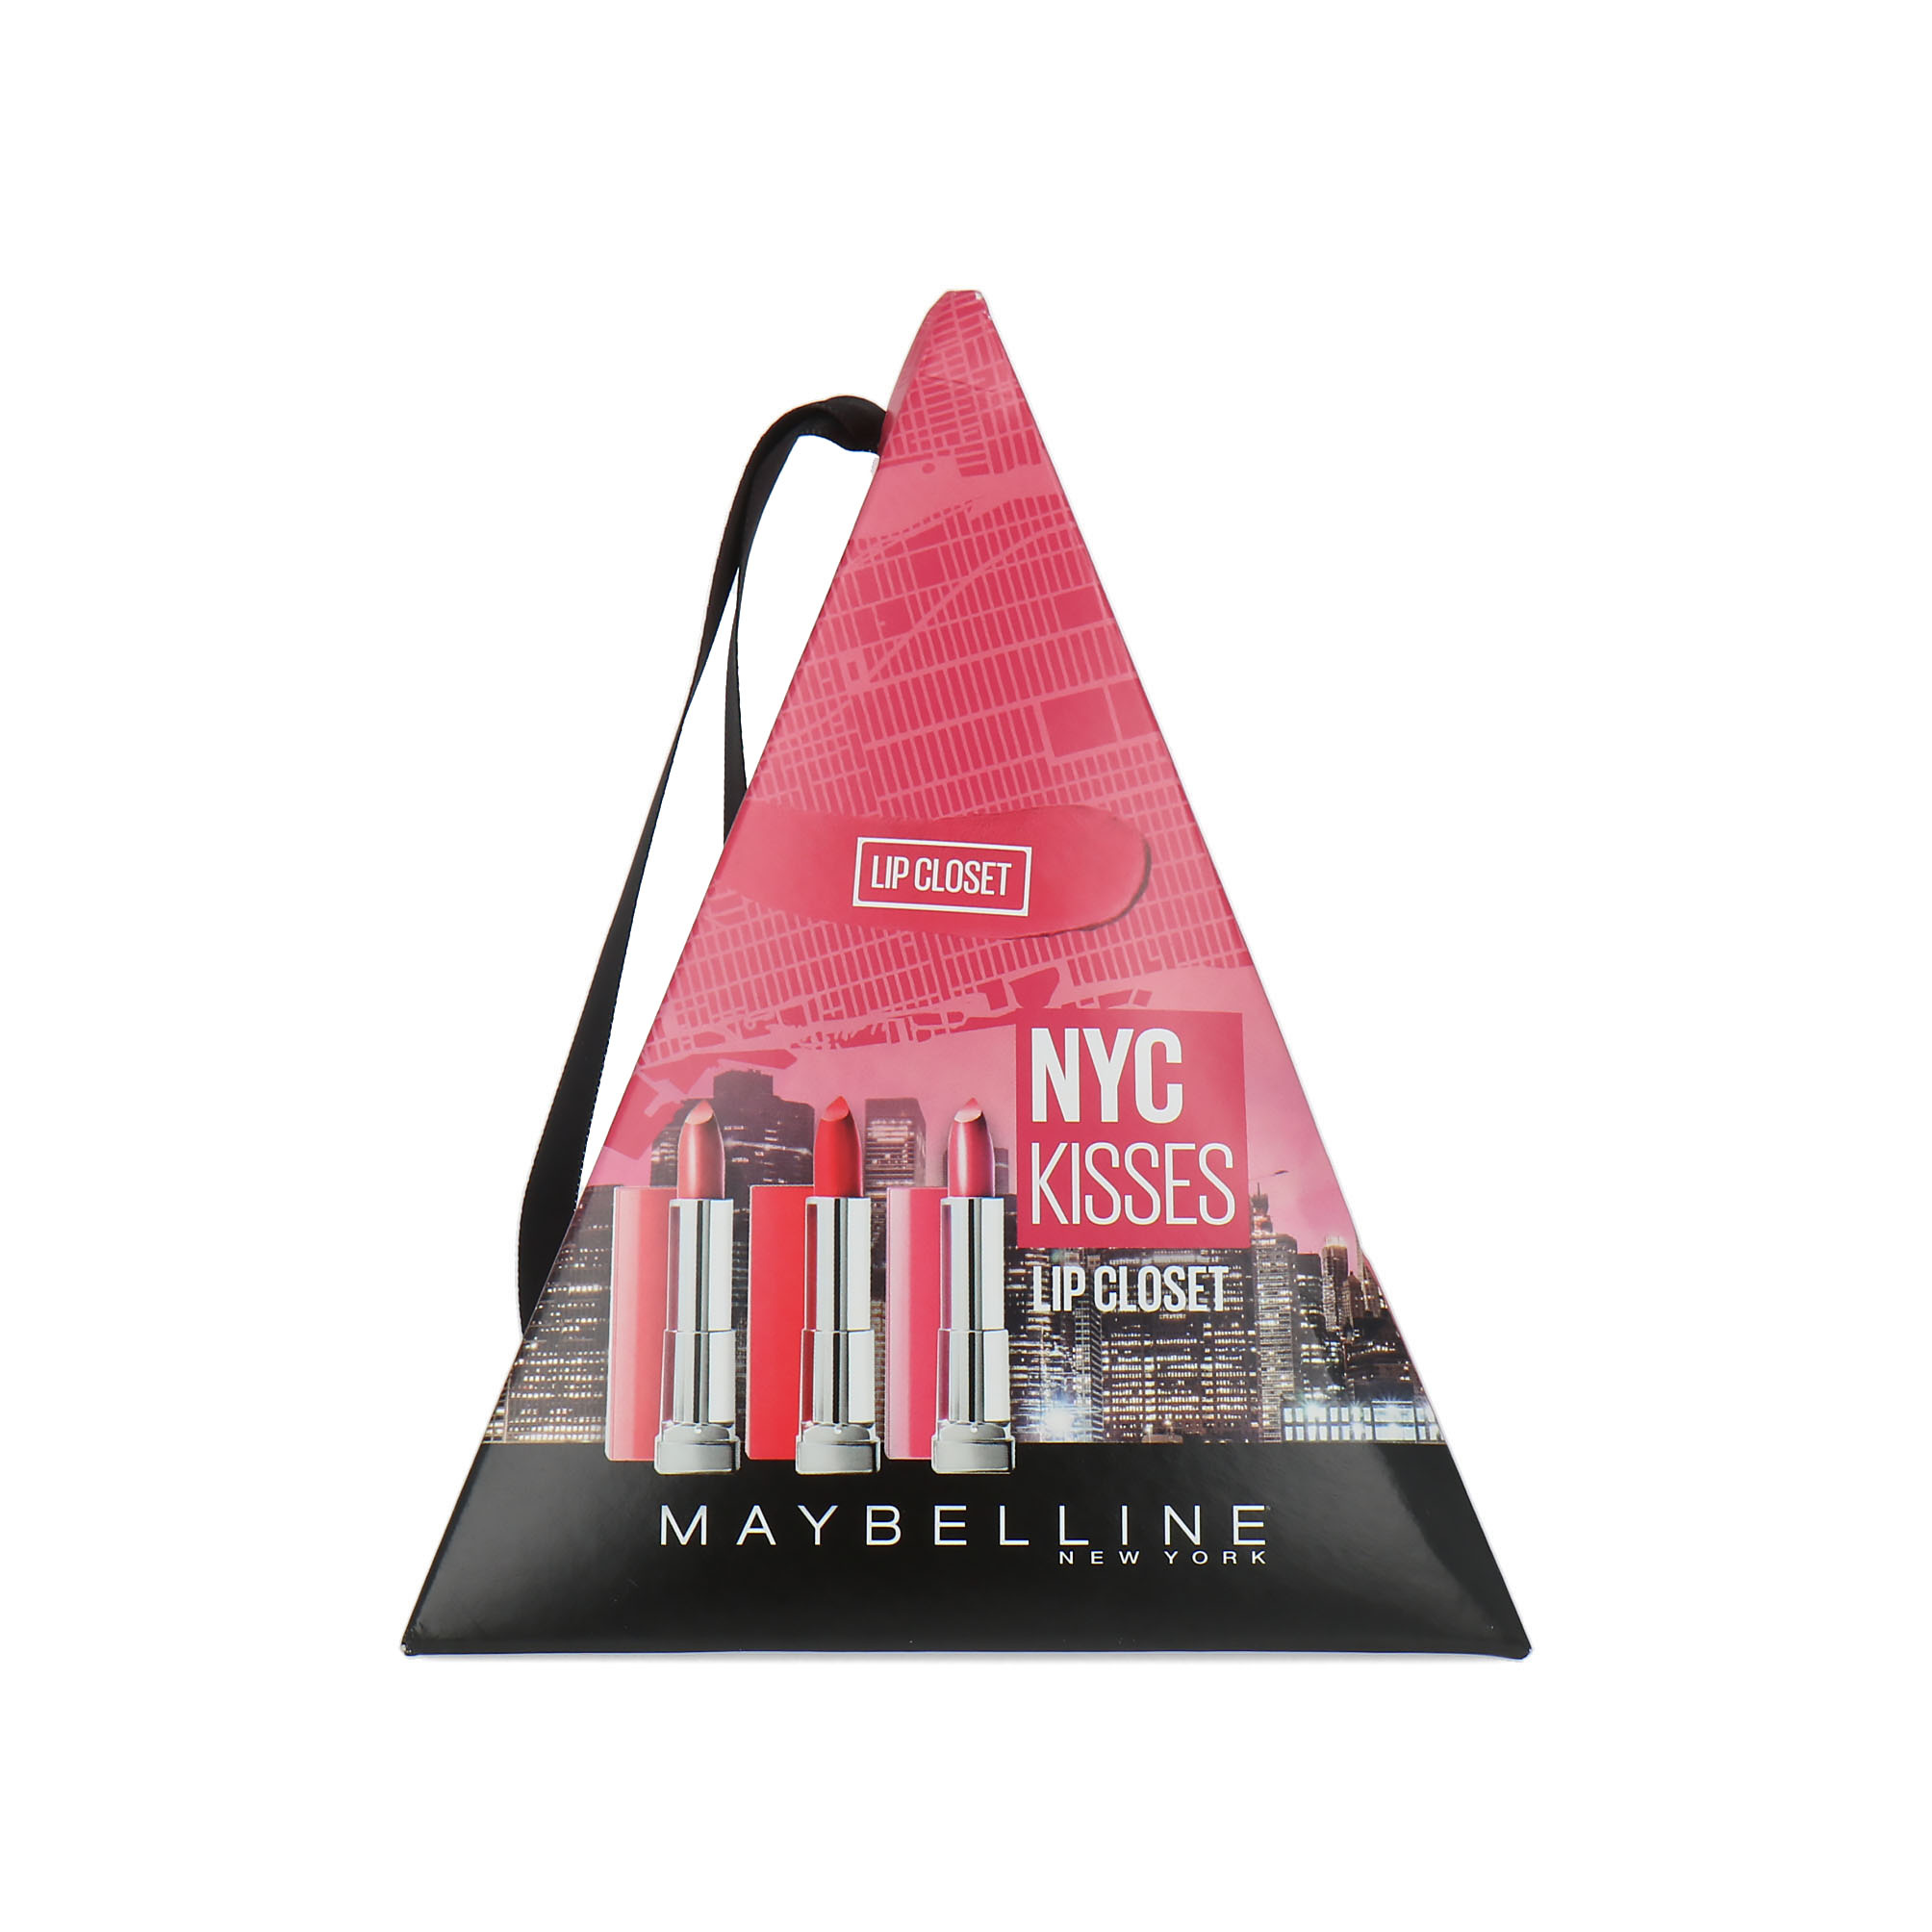 Maybelline NYC Kisses Lip Closet